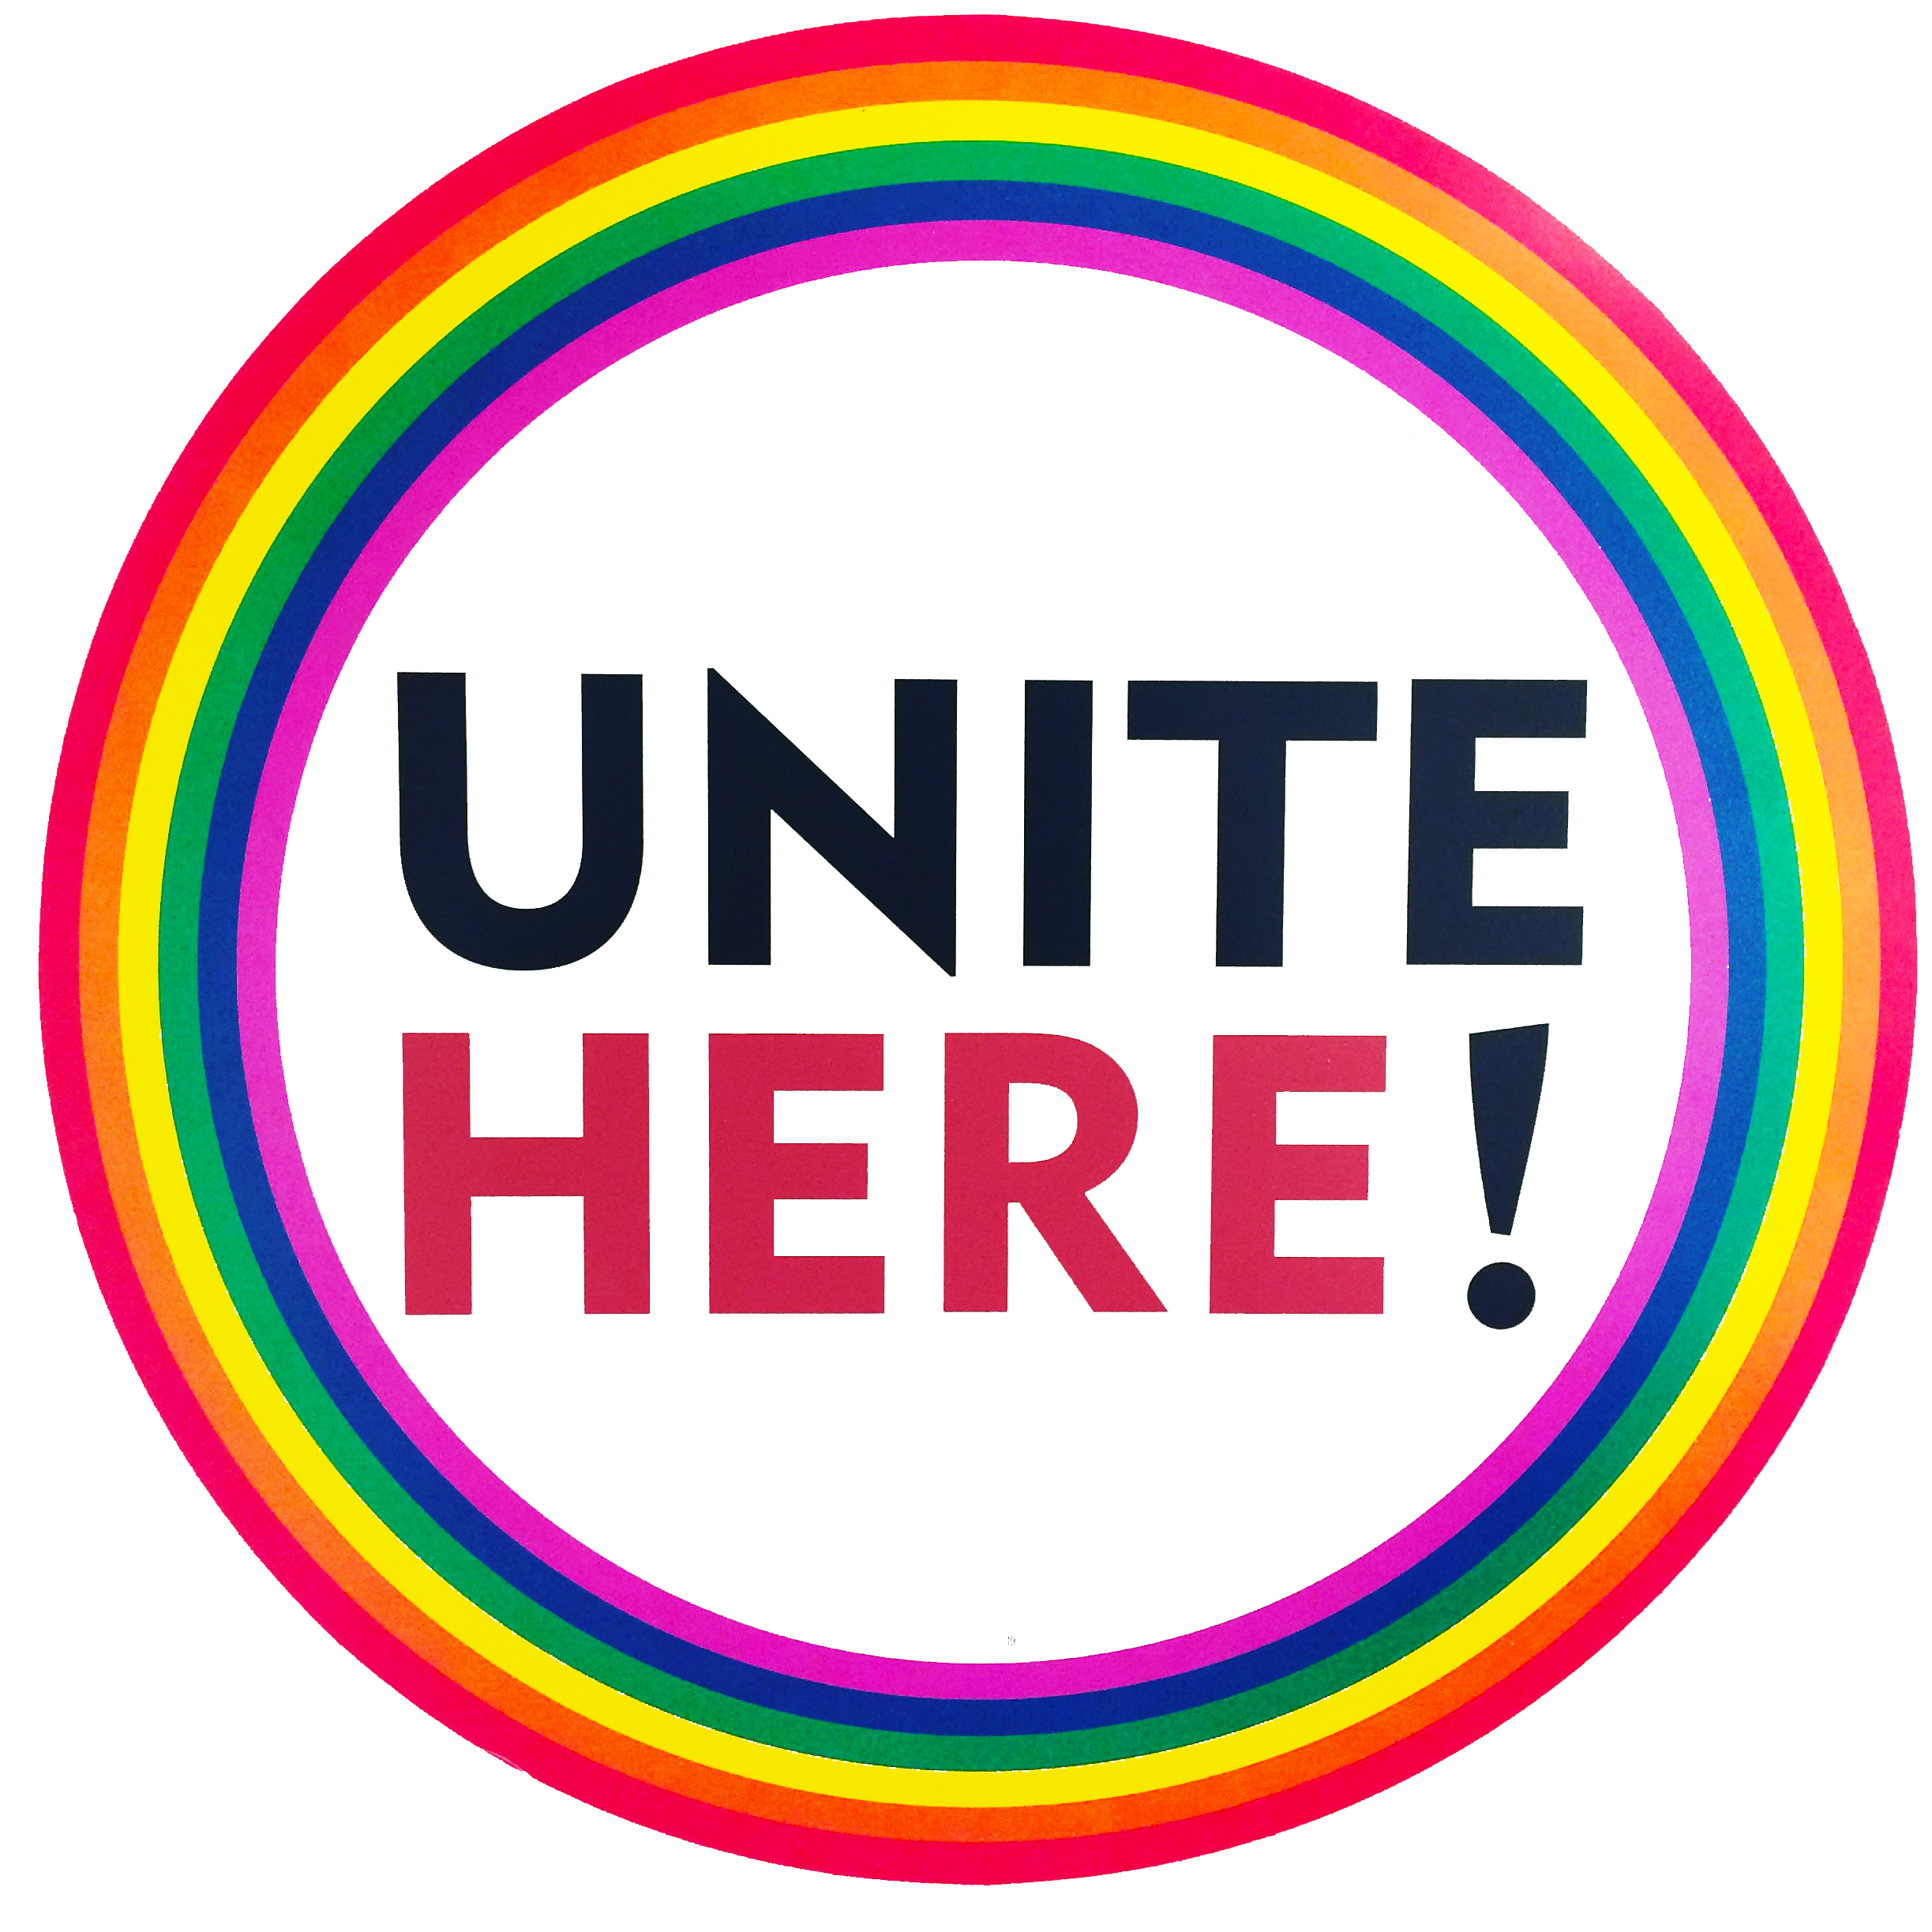 UNITE HERE LGBTQ pride and power